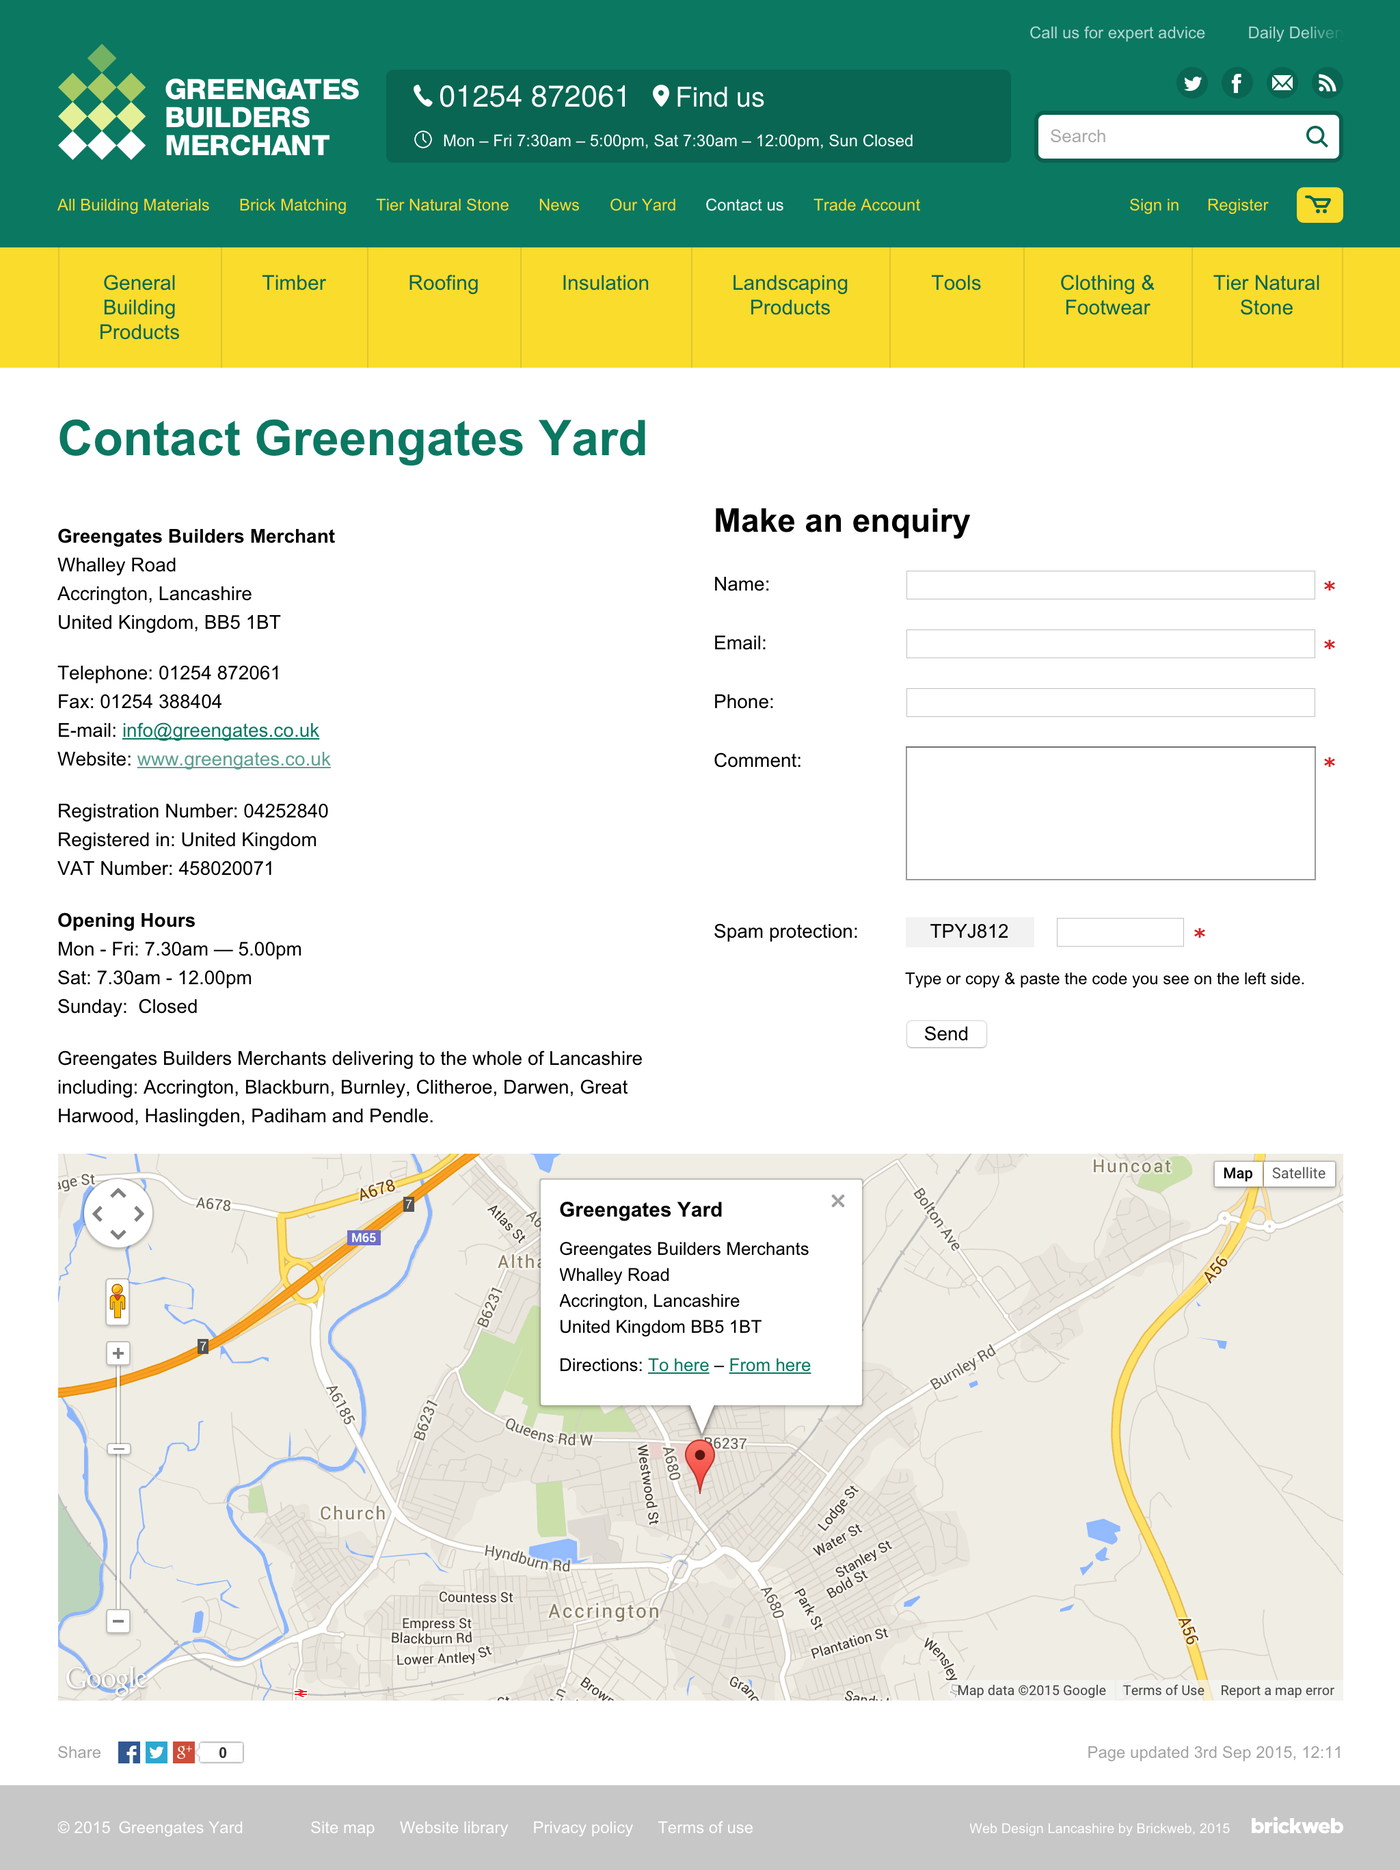 Greengates Builders Merchants (2015) Contact us